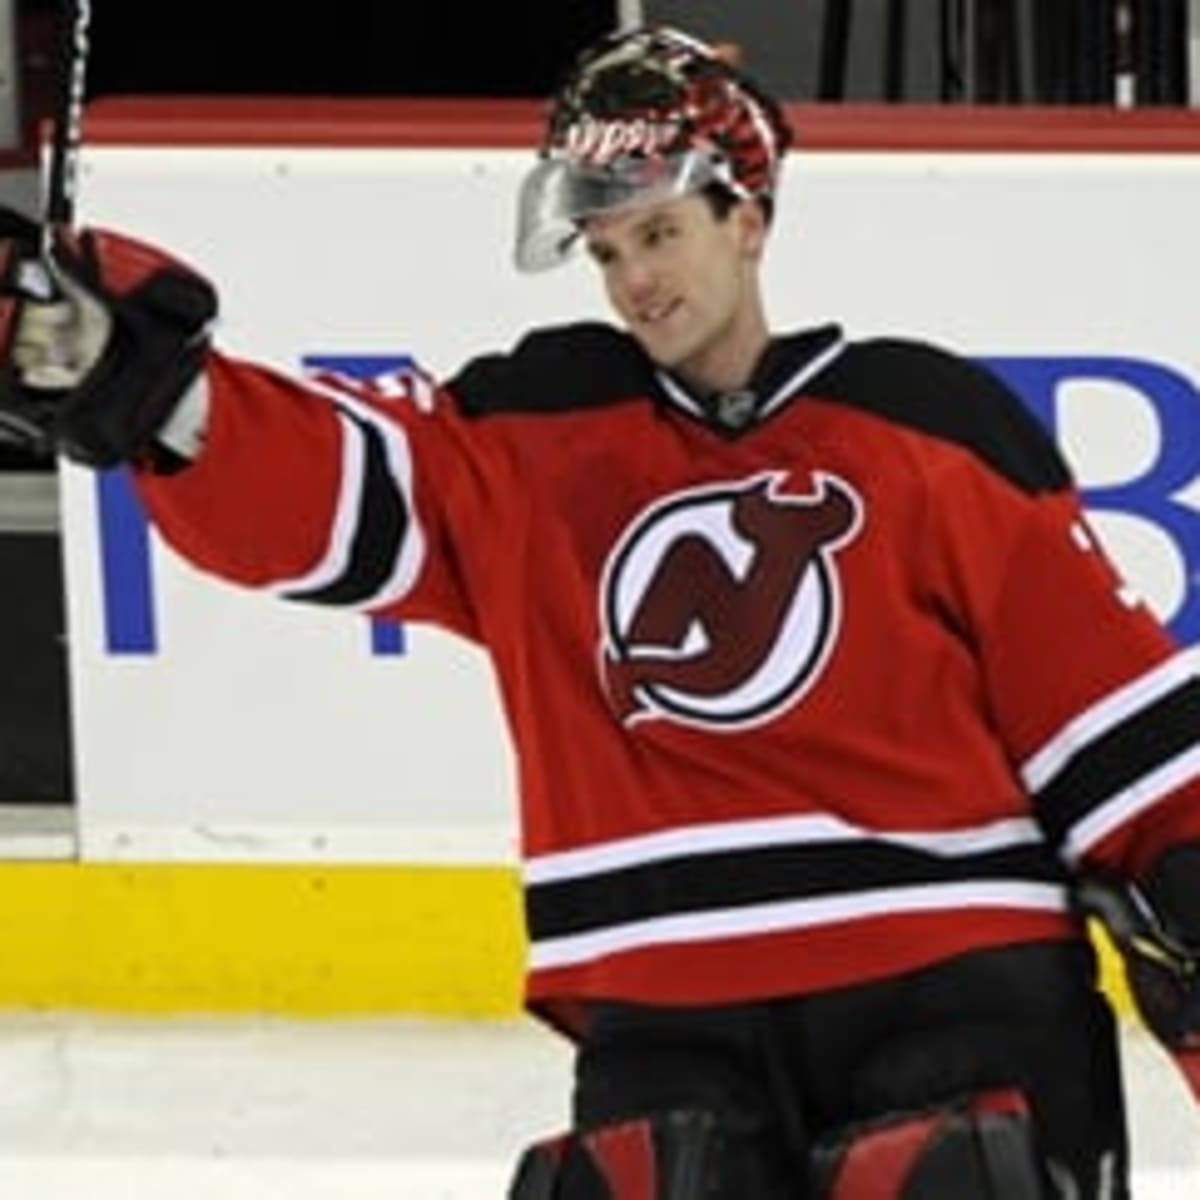 How The ECHL 'Leveled Out' New Jersey Devils Goaltender Scott